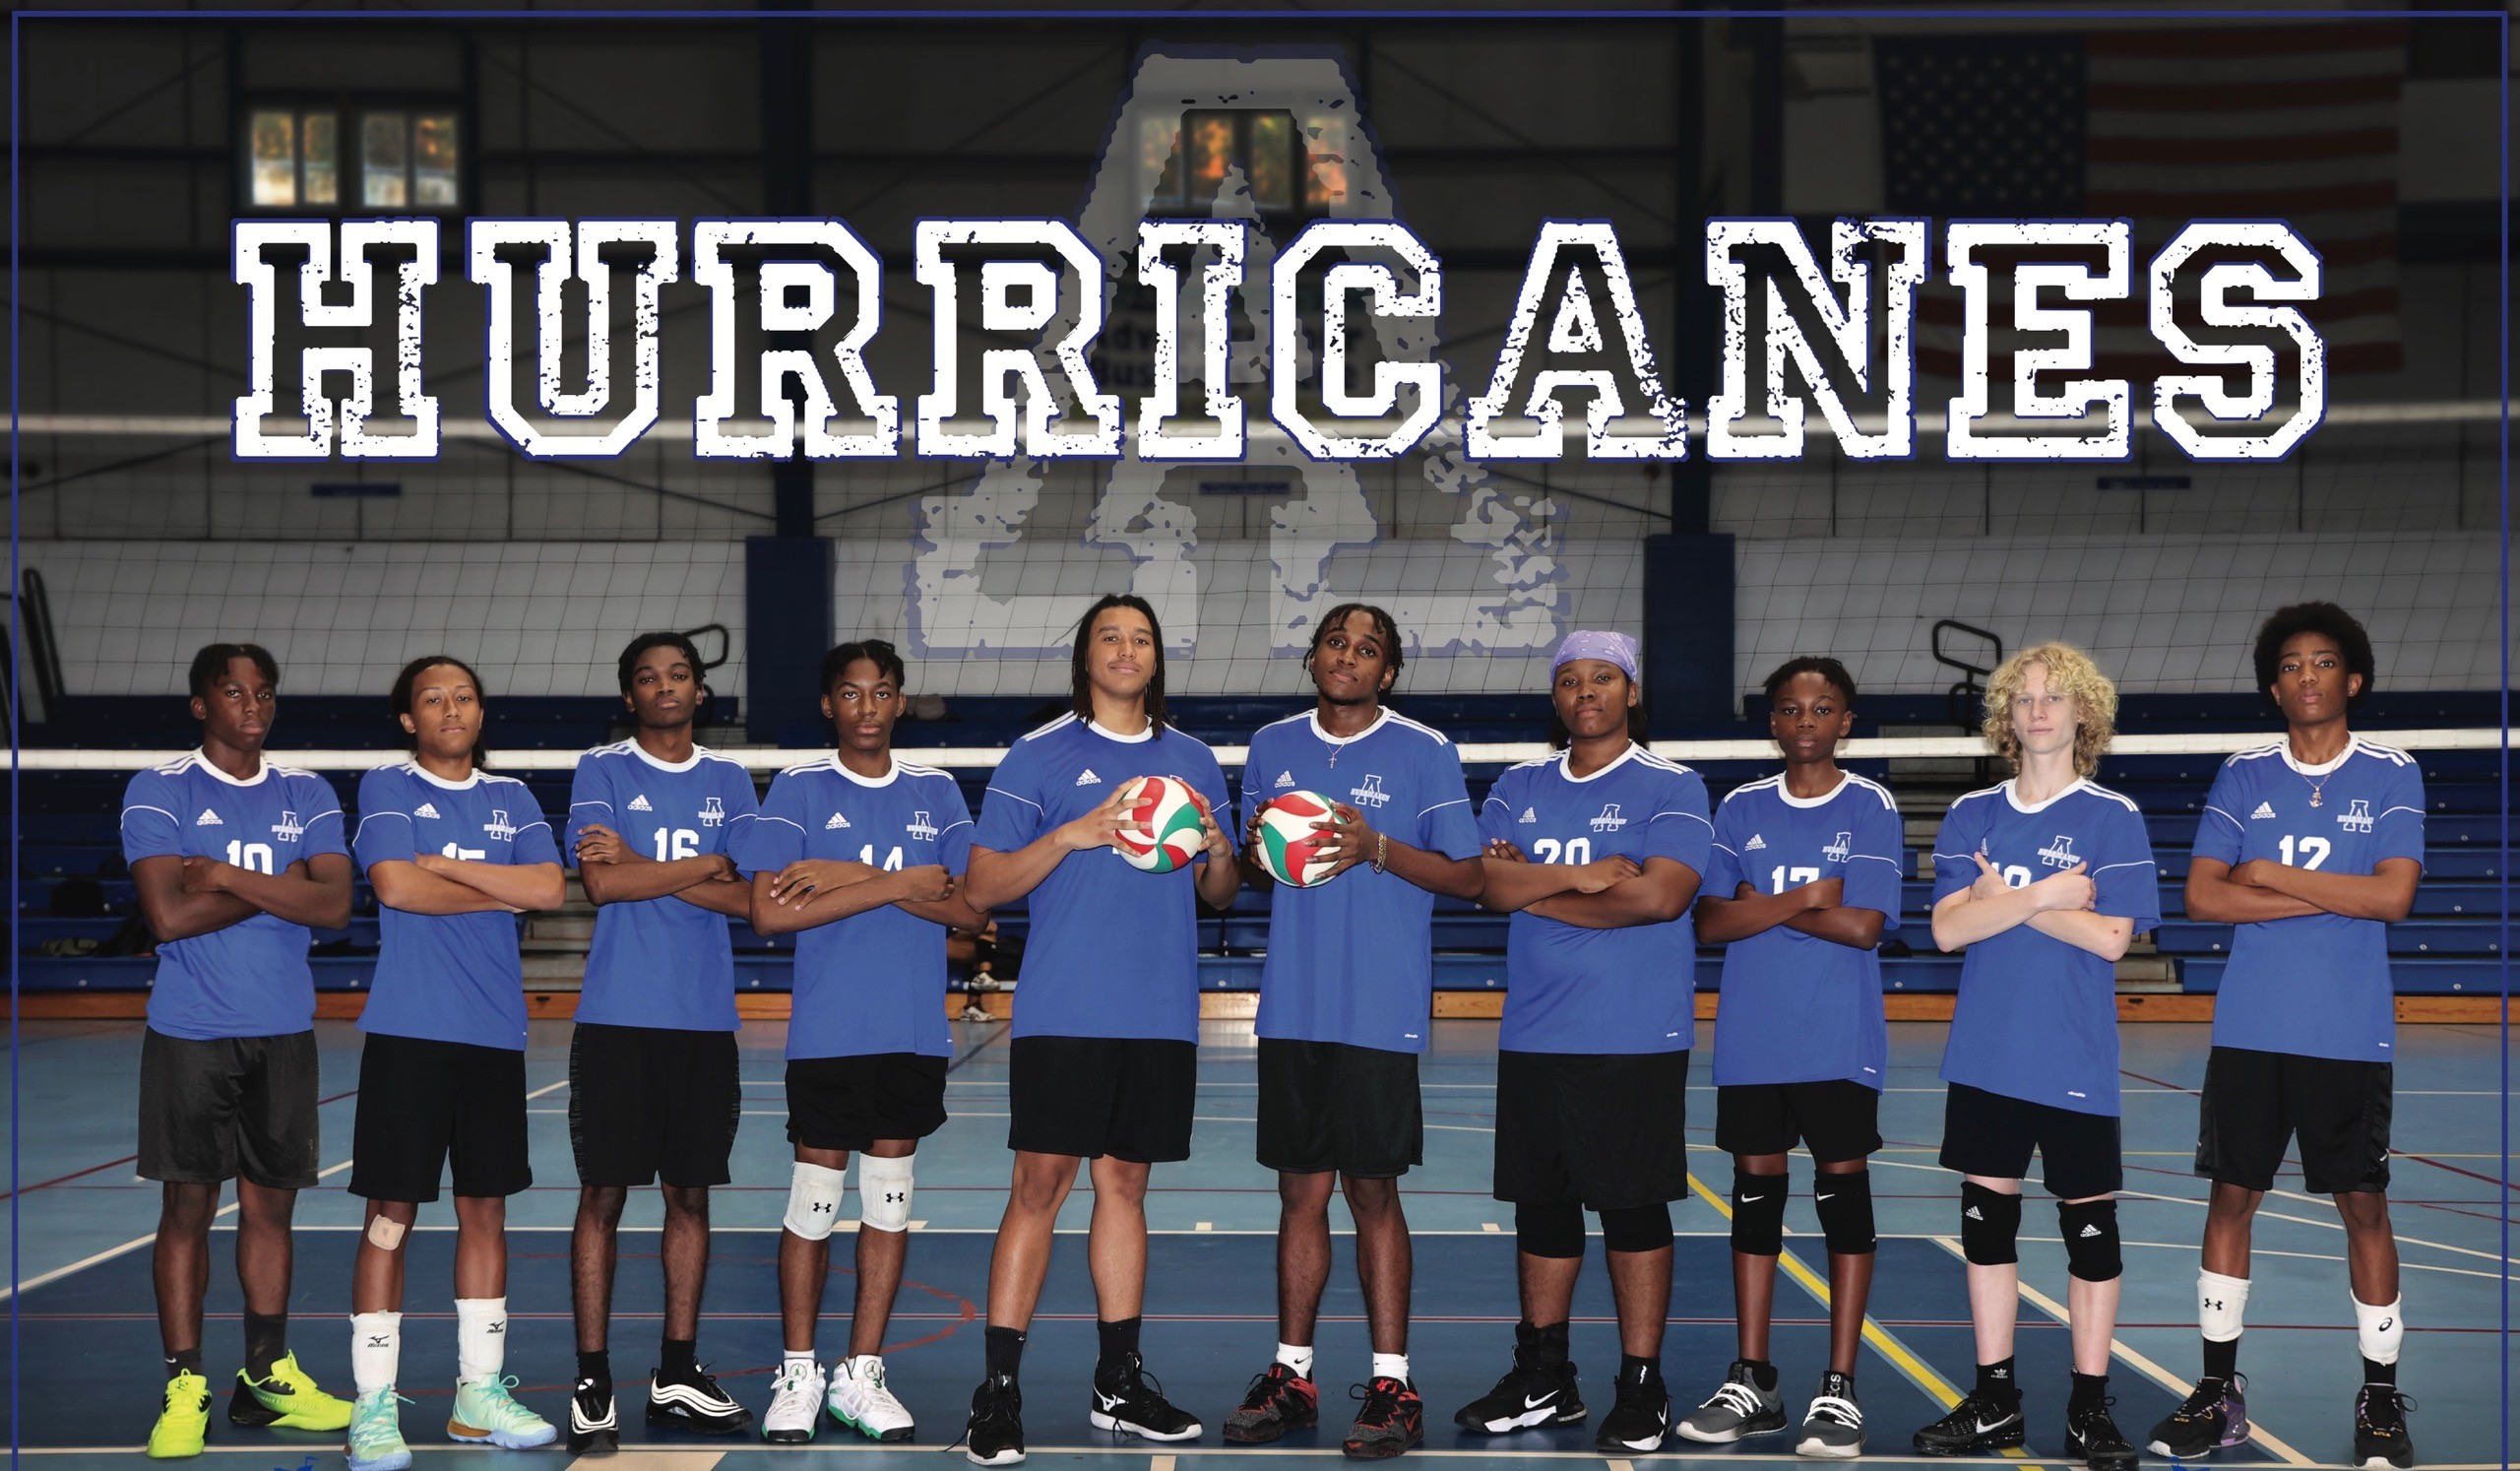 2.Antilles School Hurricanes varsity boys volleyball team picture. (Photo by Kelly Uszenski)